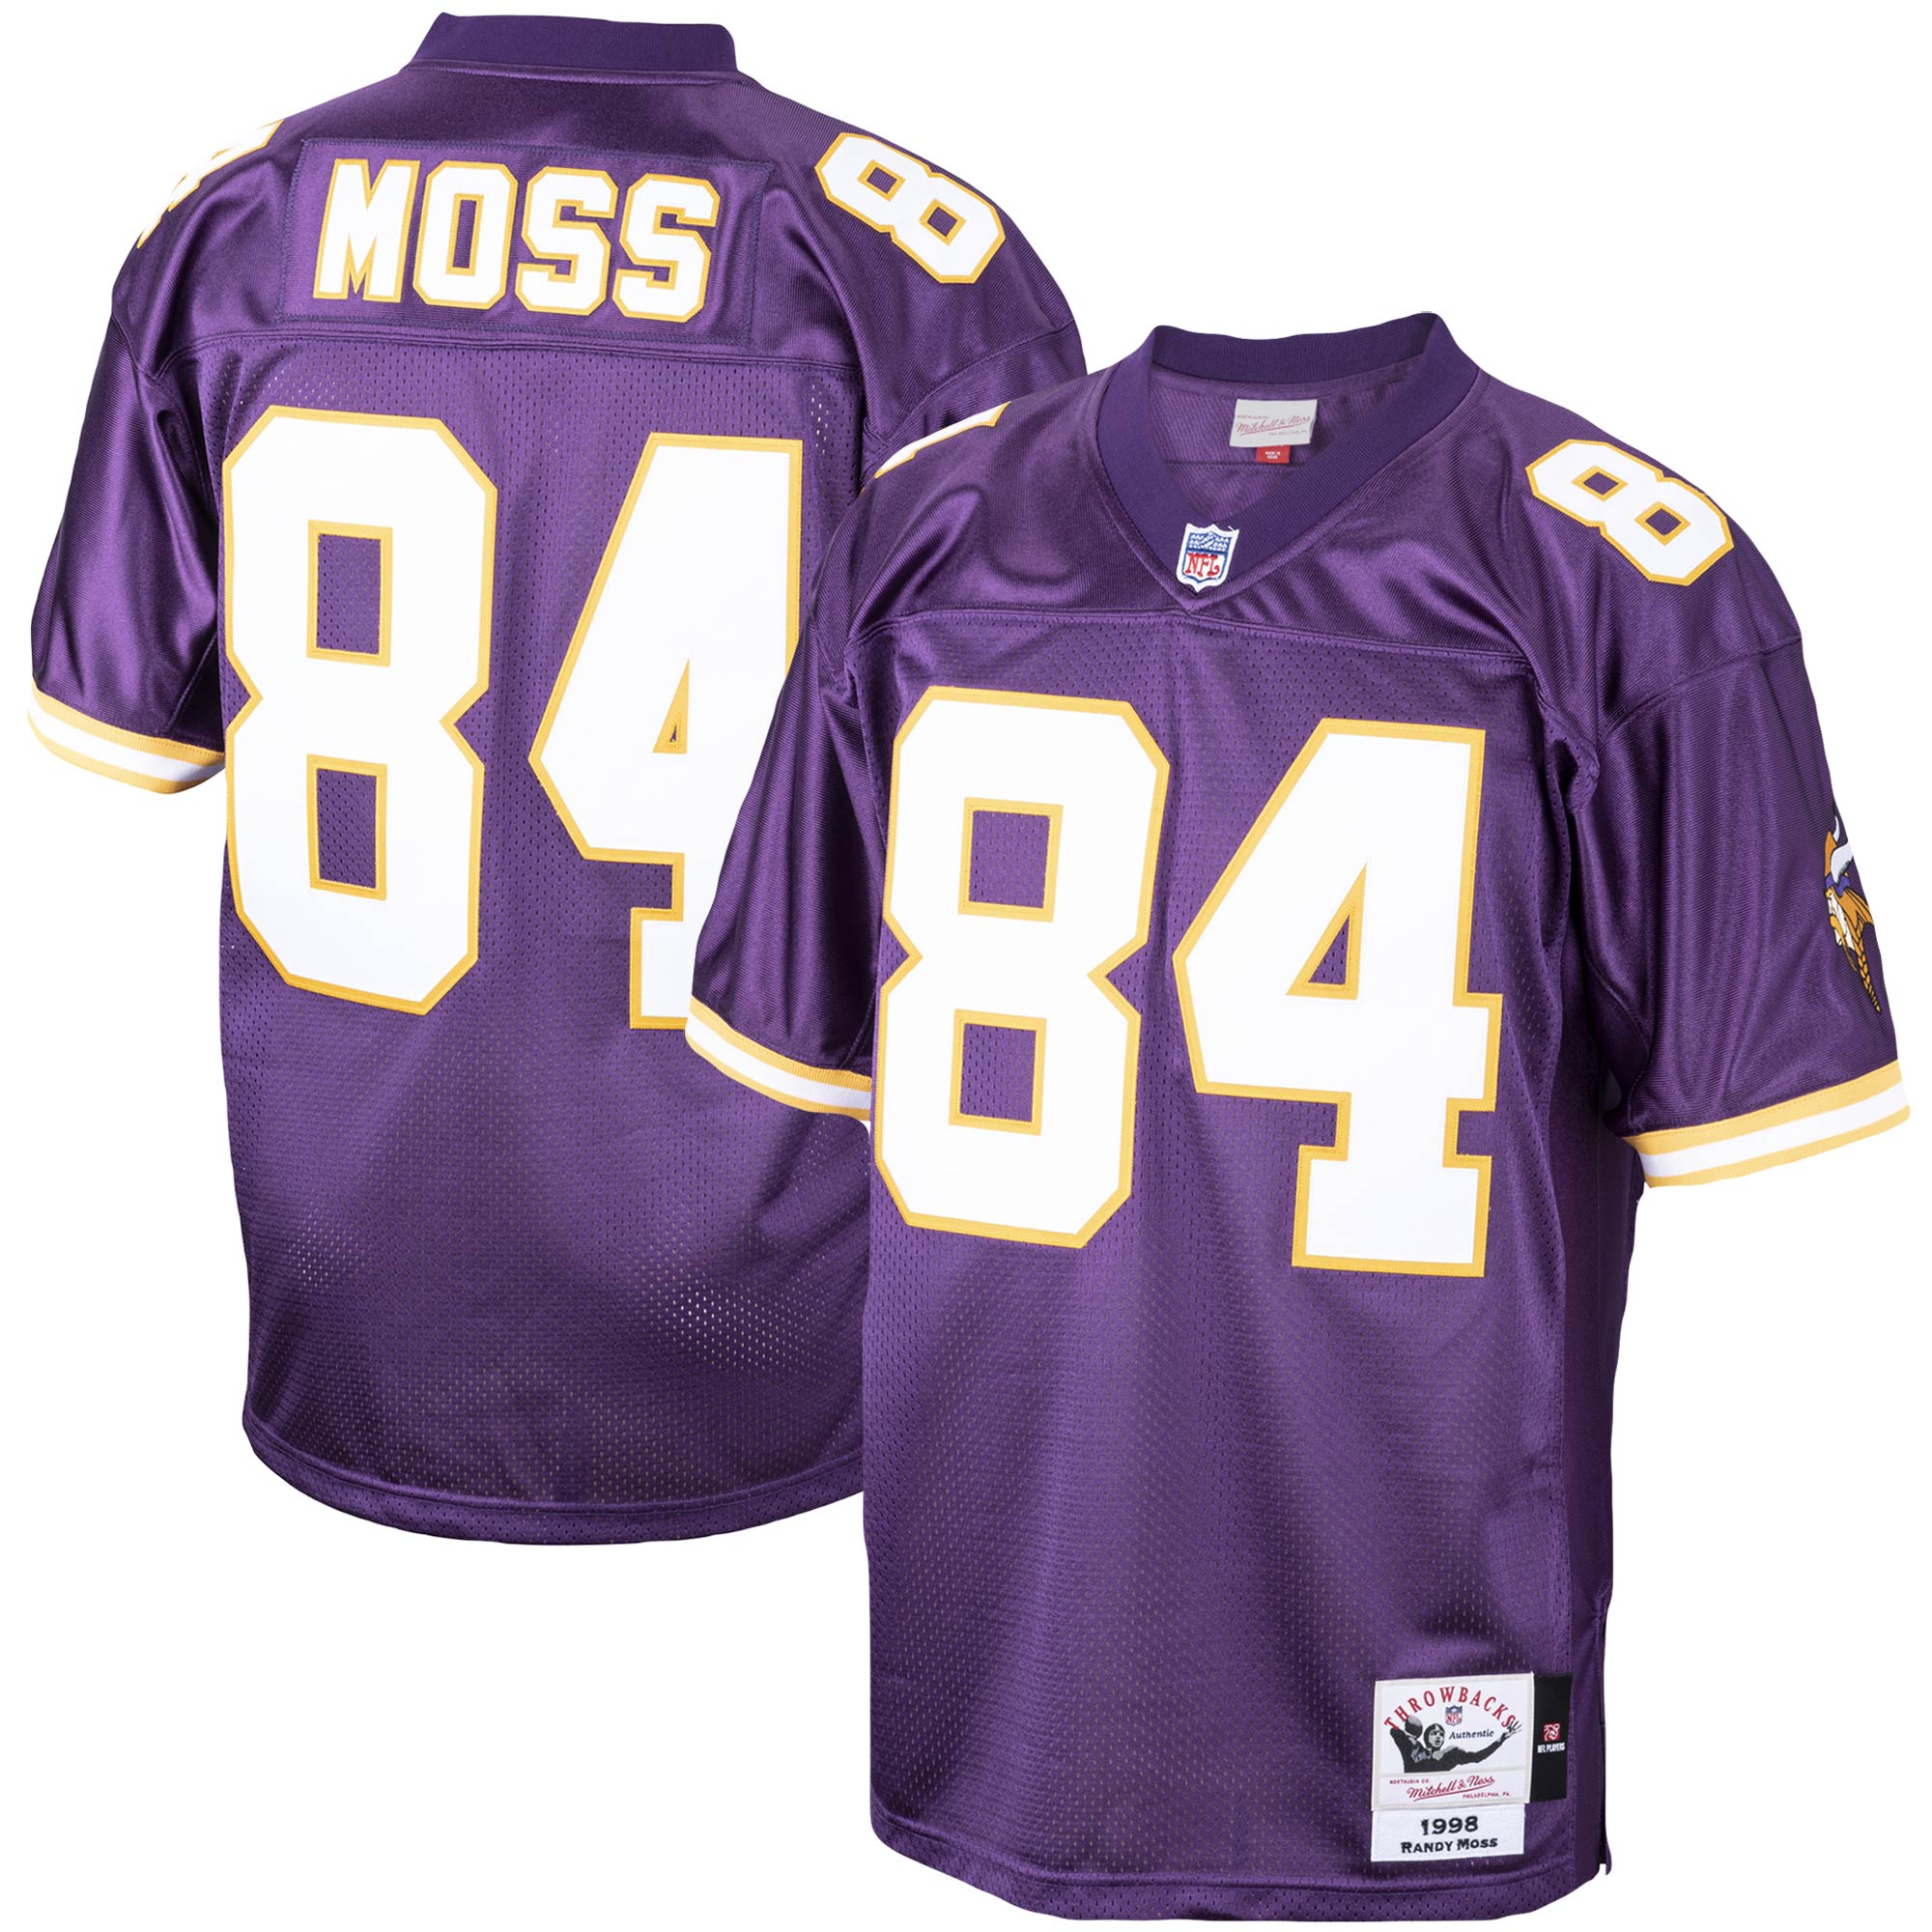 Men's Minnesota Vikings Jerseys Purple Randy Moss 1998 Authentic Throwback Retired Player Style